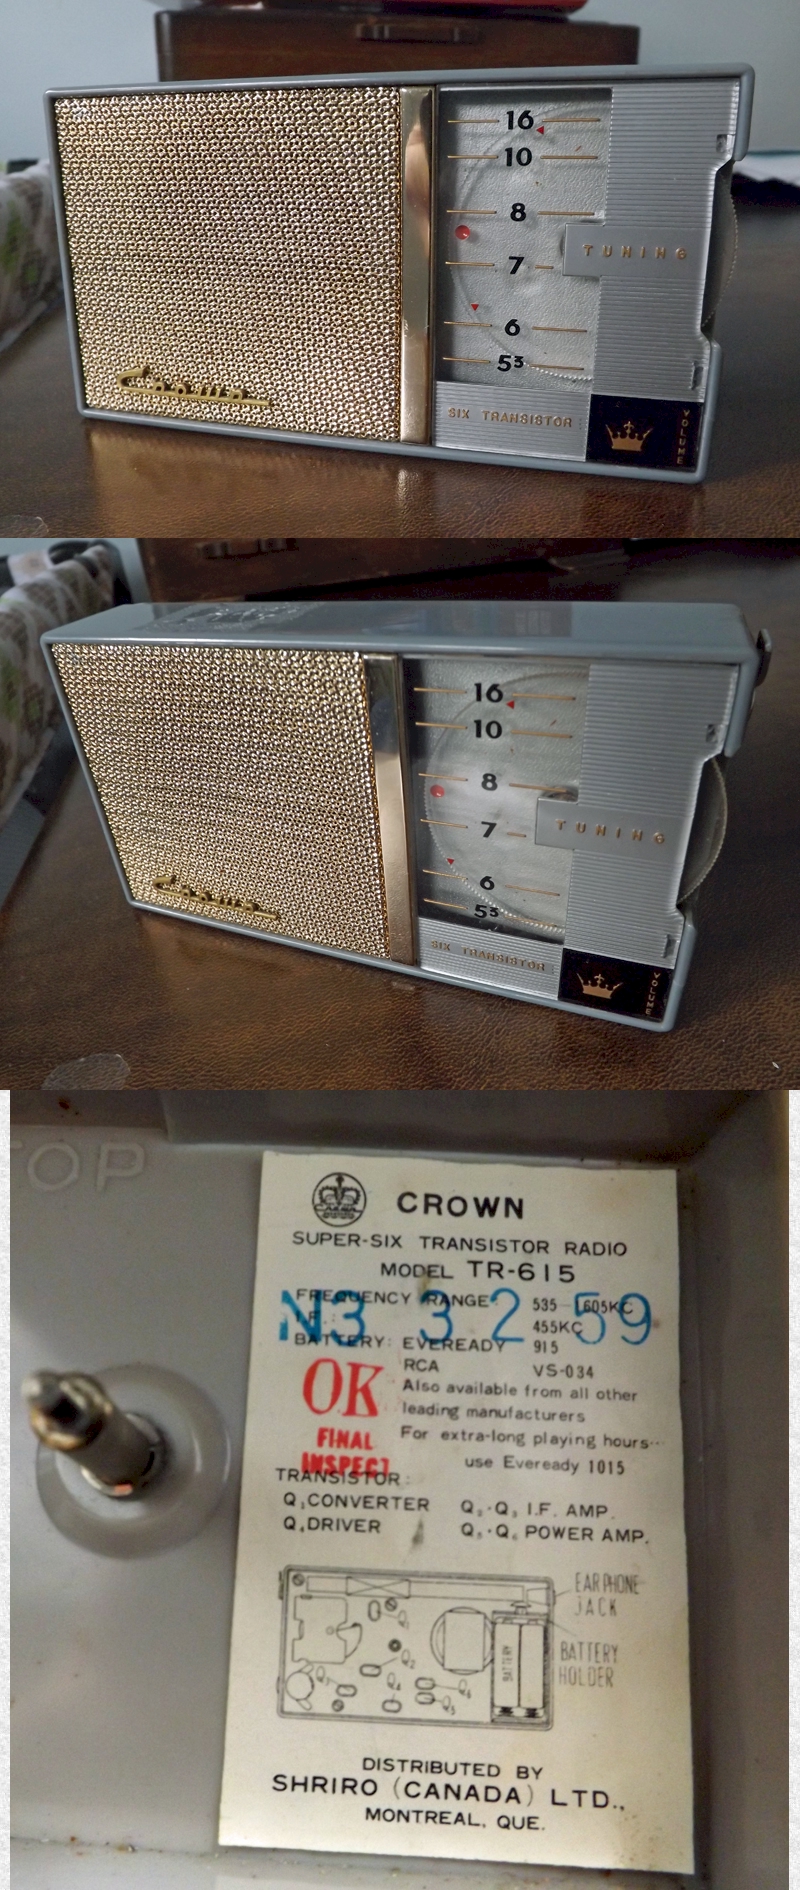 Crown TR-615 